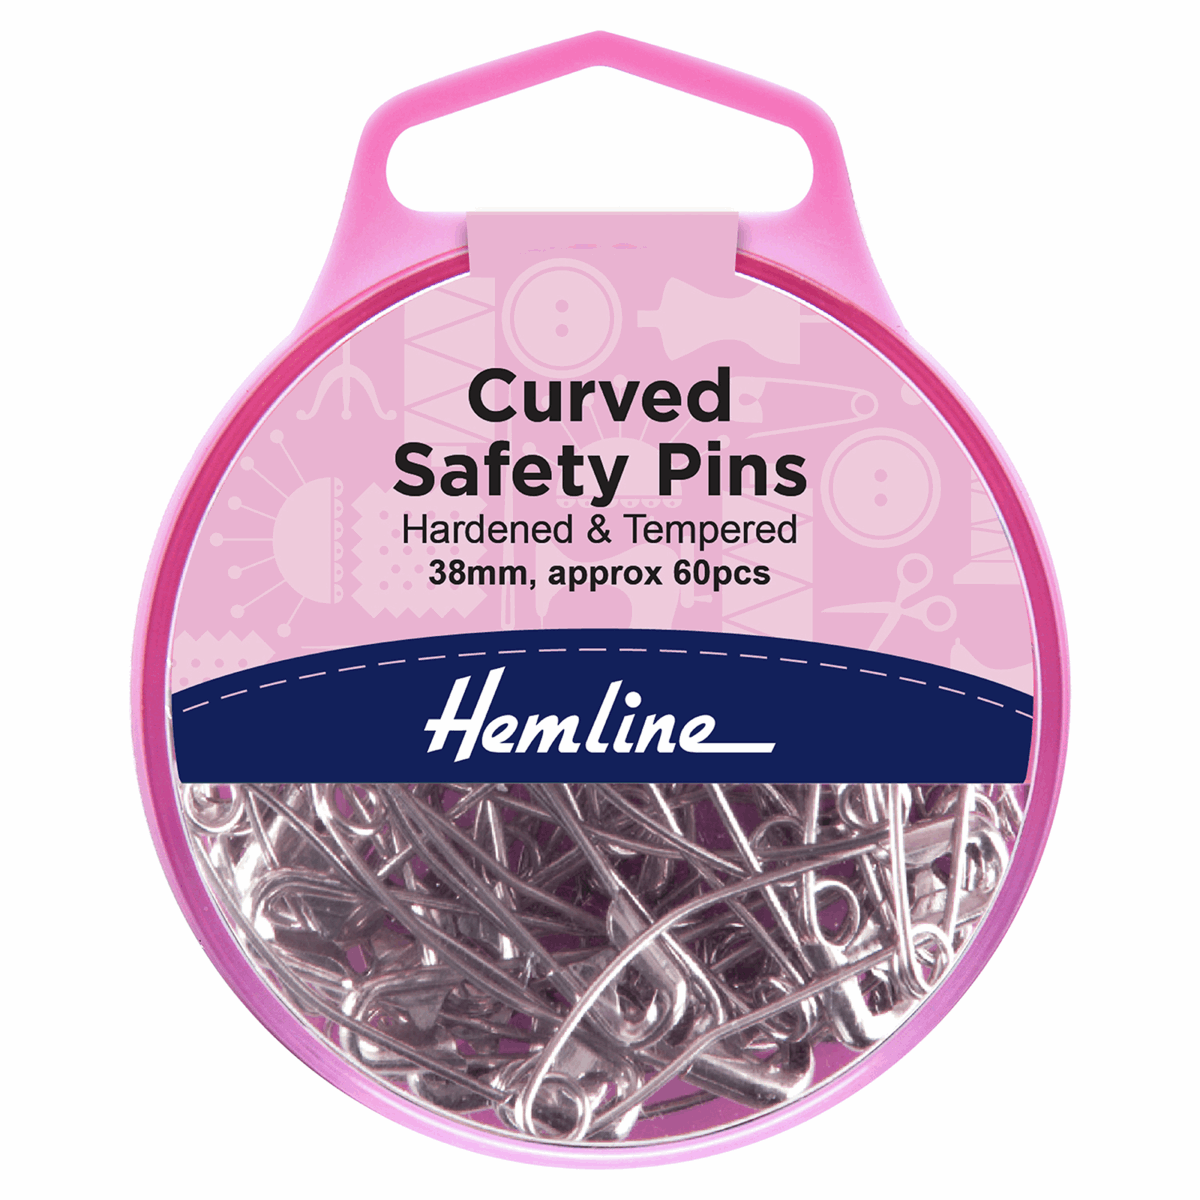 Hemline Curved Safety Pins 38mm